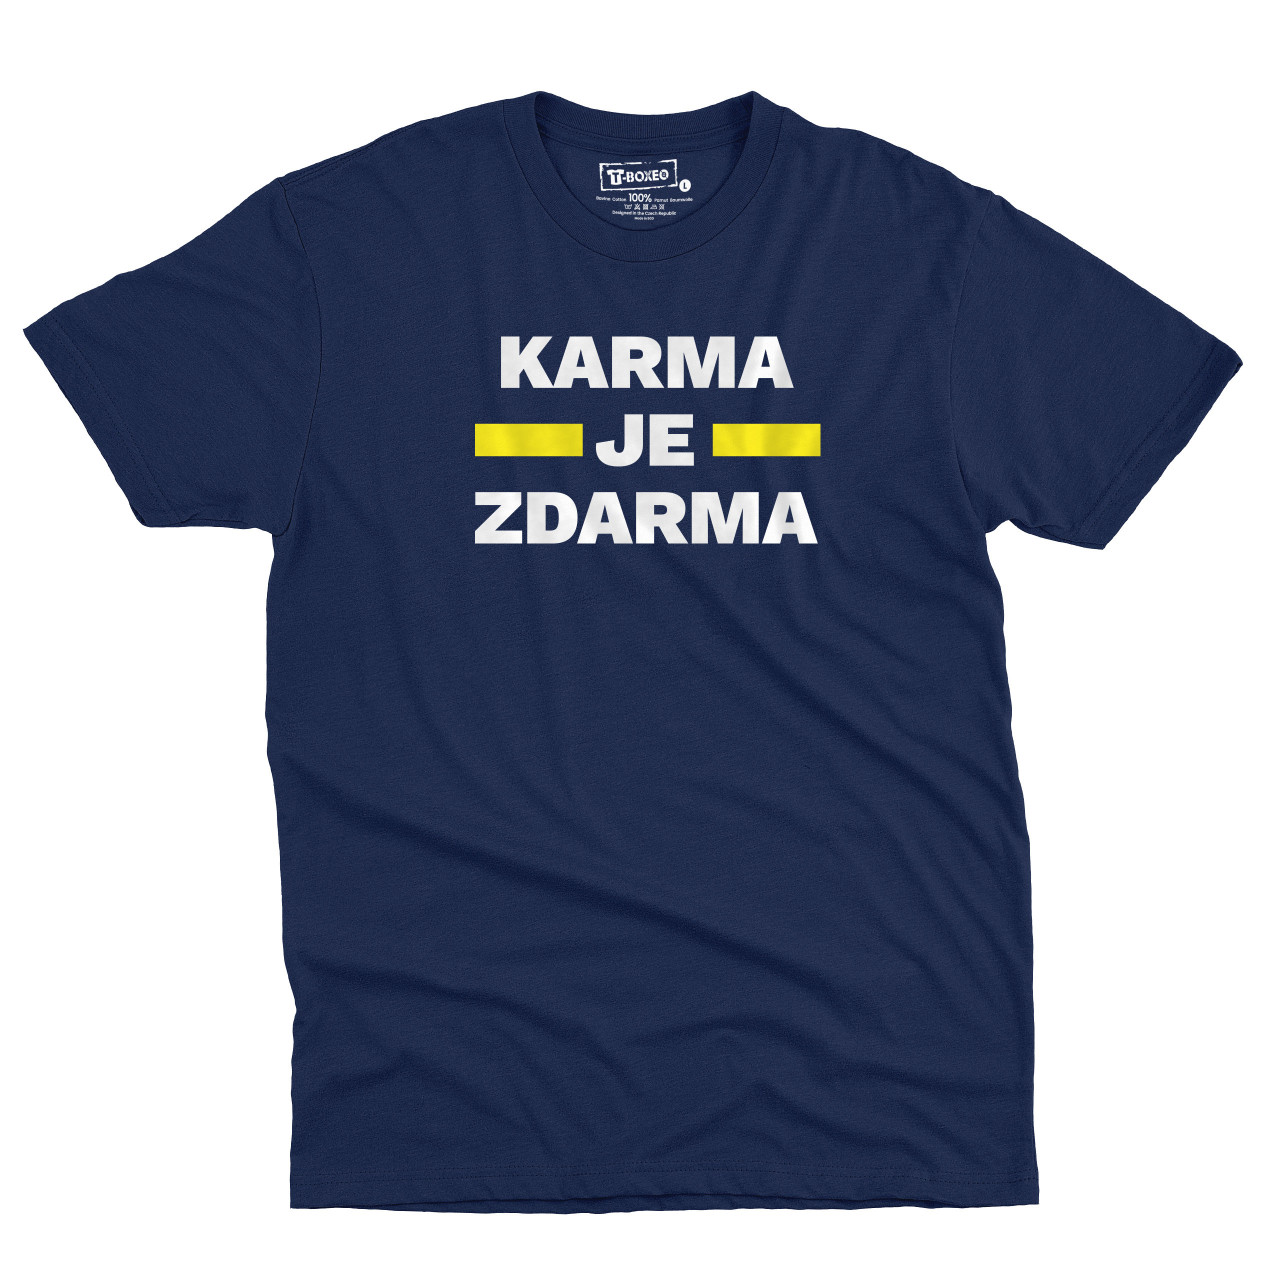 Pánské tričko s potiskem “Karma je zdarma”